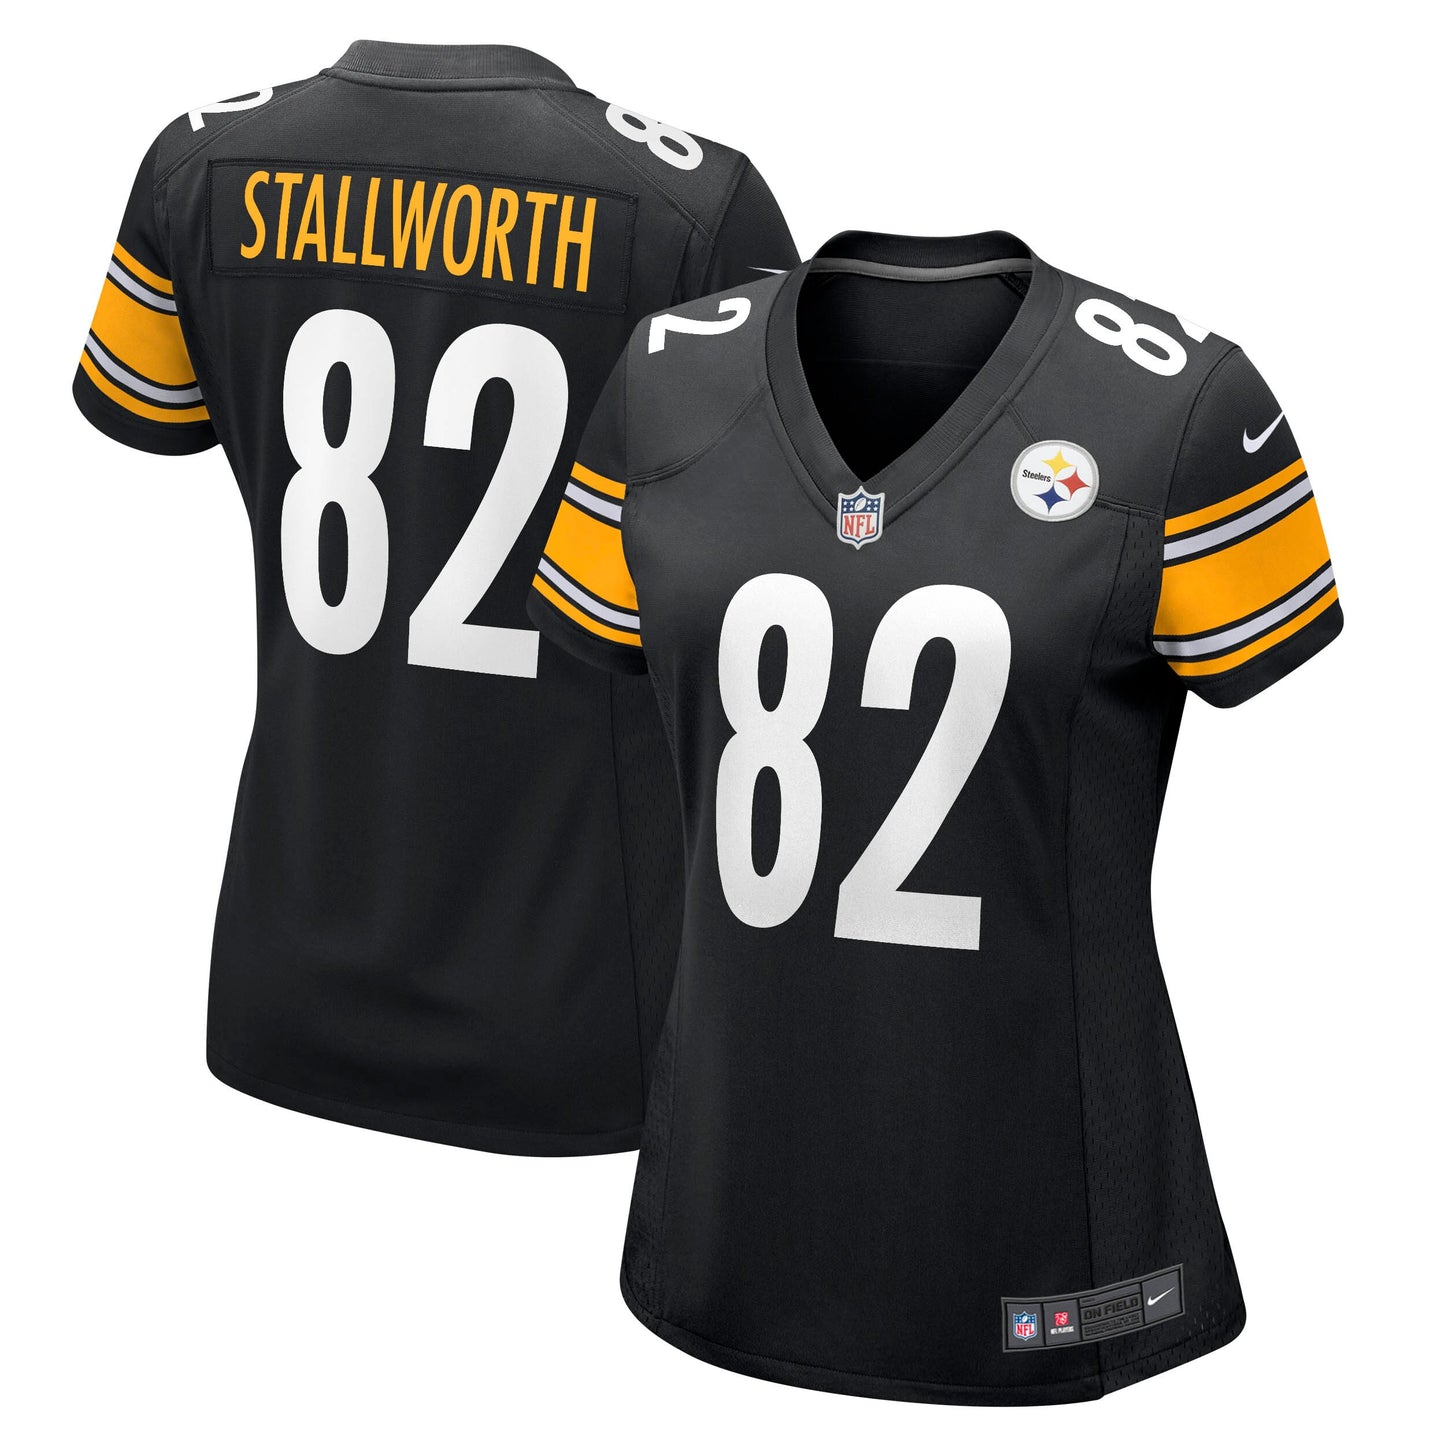 John Stallworth Pittsburgh Steelers Nike Women's Retired Player Jersey - Black